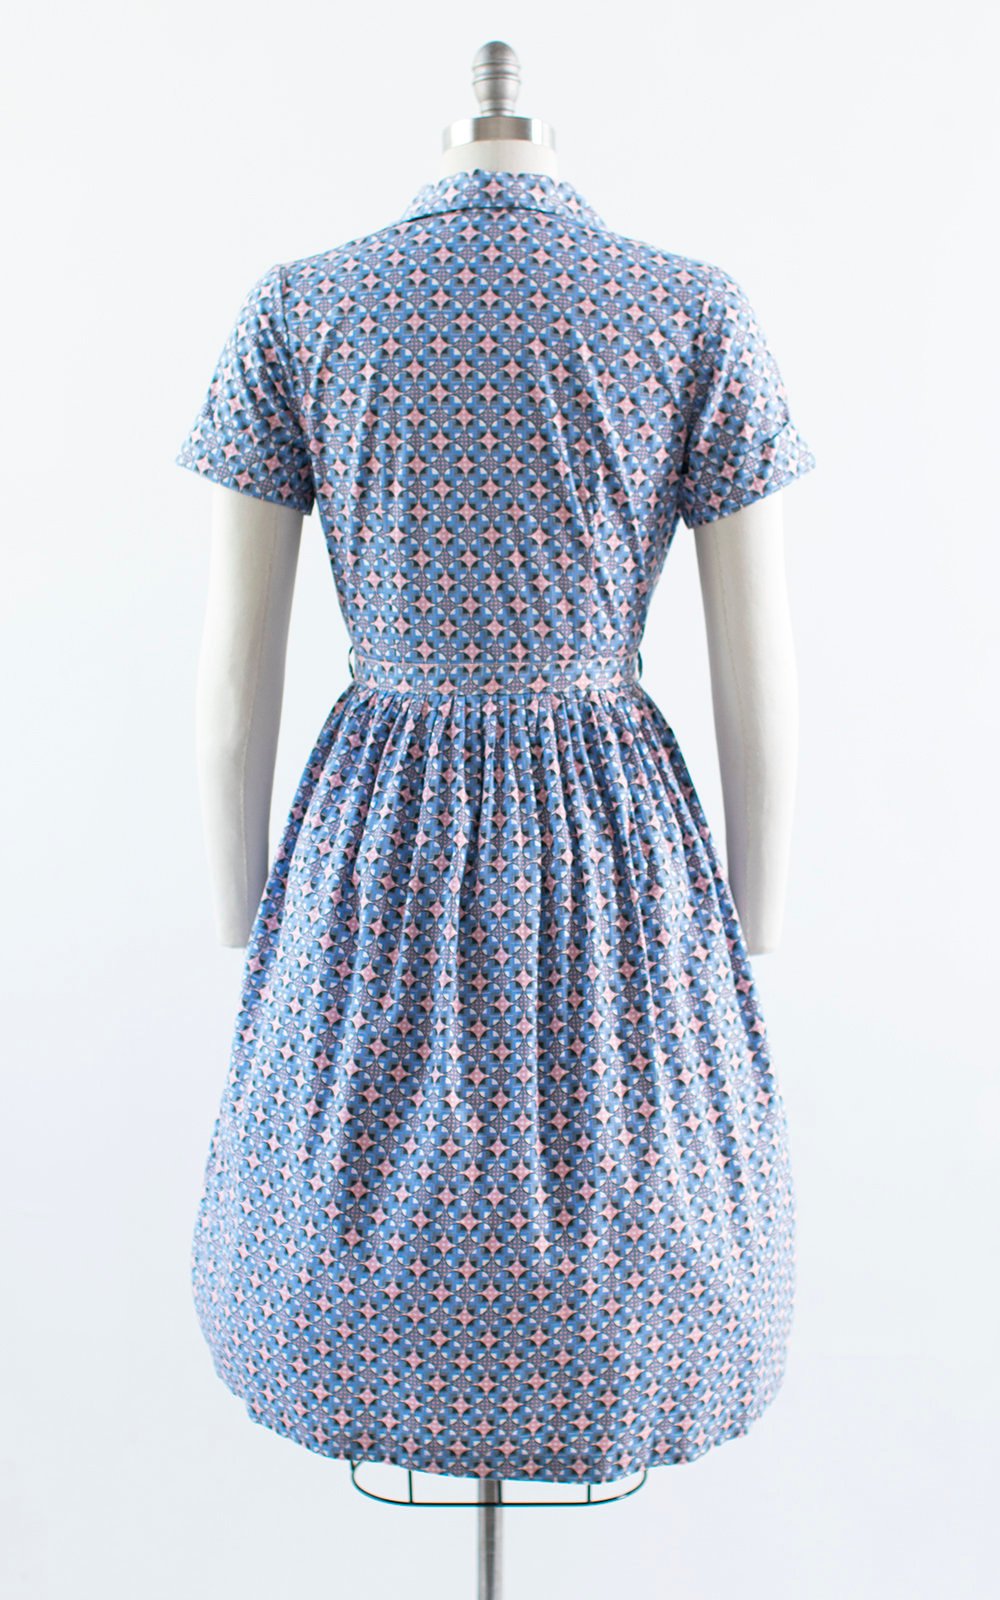 Vintage 1950s Dress | 50s Geometric Polka Dot Cotton Shirt Dress Blue Pink Shirtwaist Day Dress (medium)